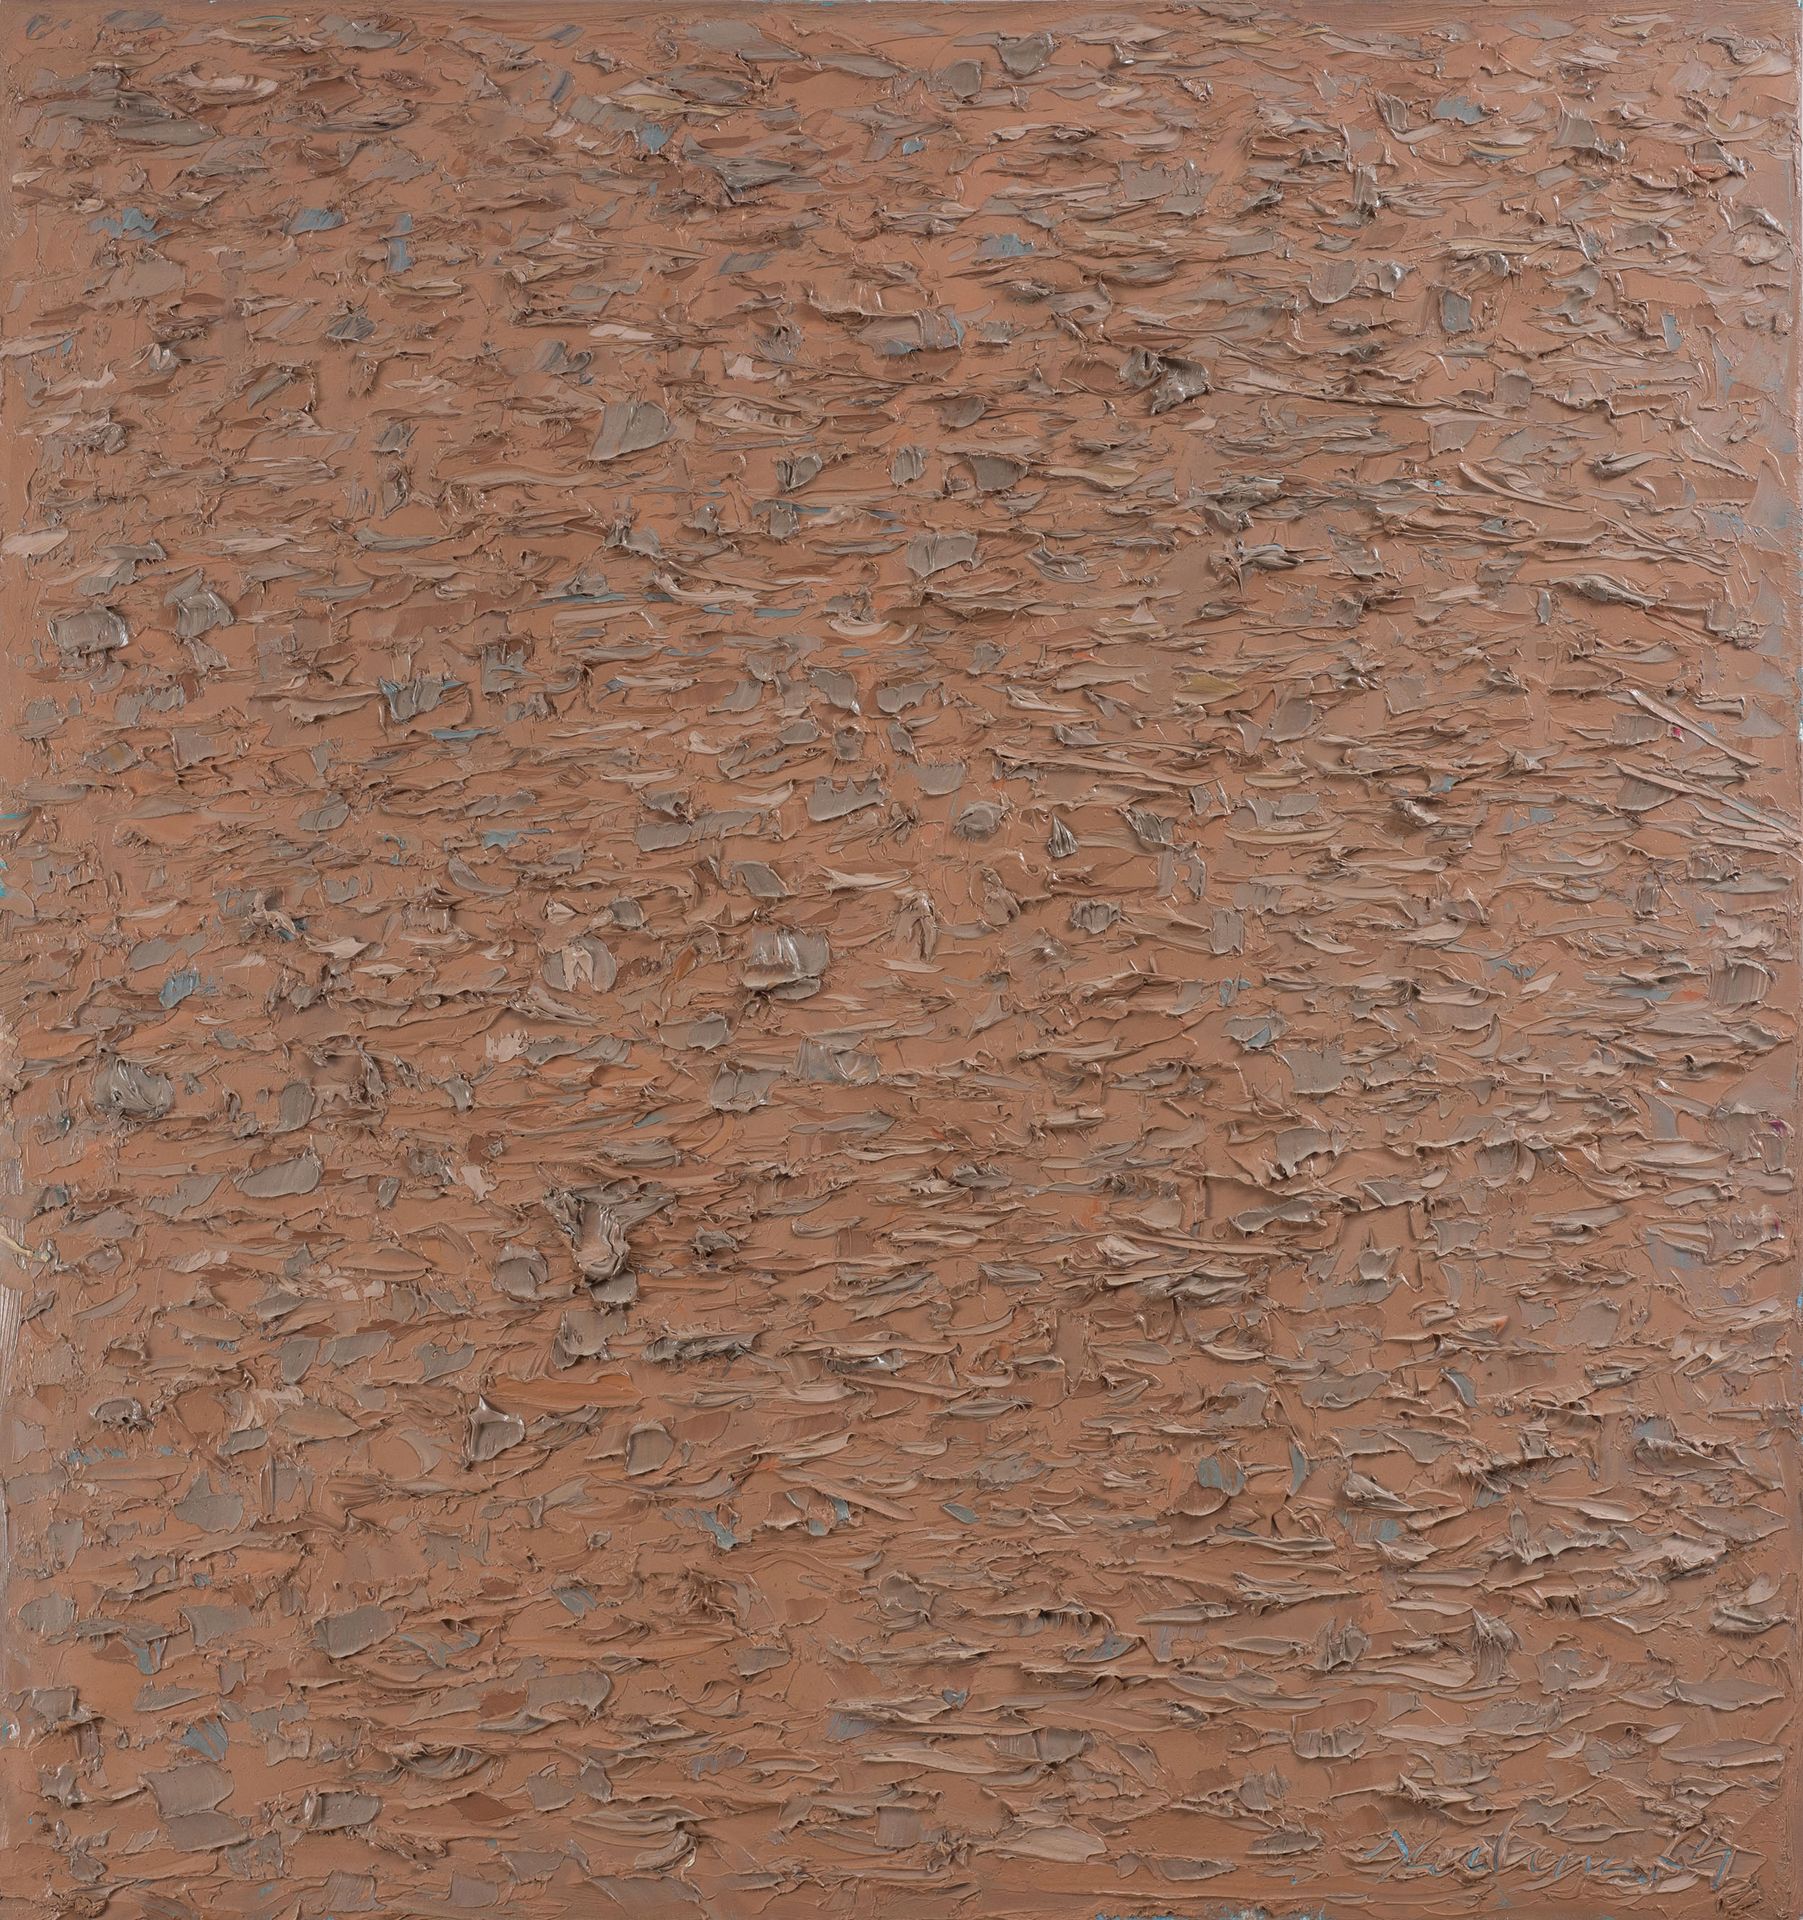 PIERO SADUN Siena 1919 ; 1974
VI no. 31, 1974
Technique mixte sur toile, 80 x 75&hellip;